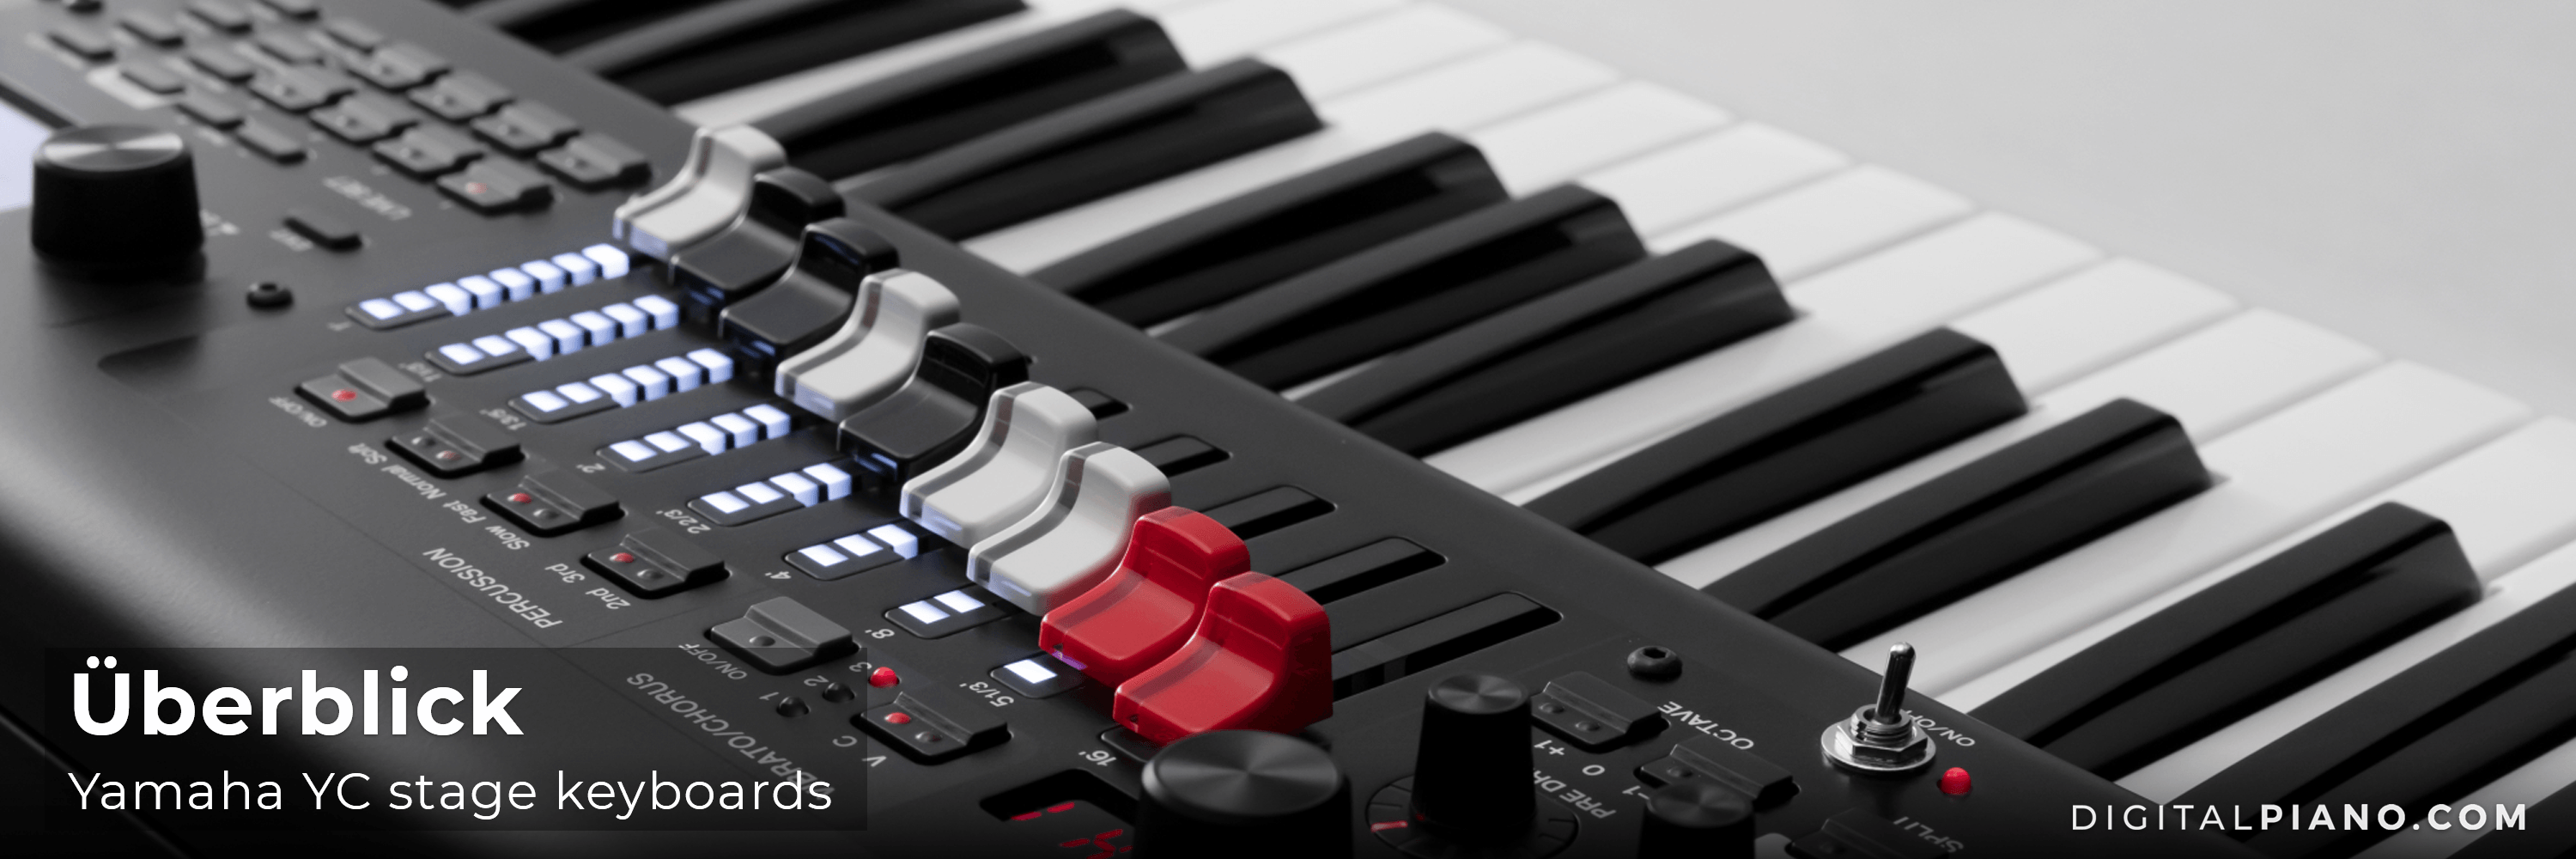 Überblick - Yamaha YC stage keyboards